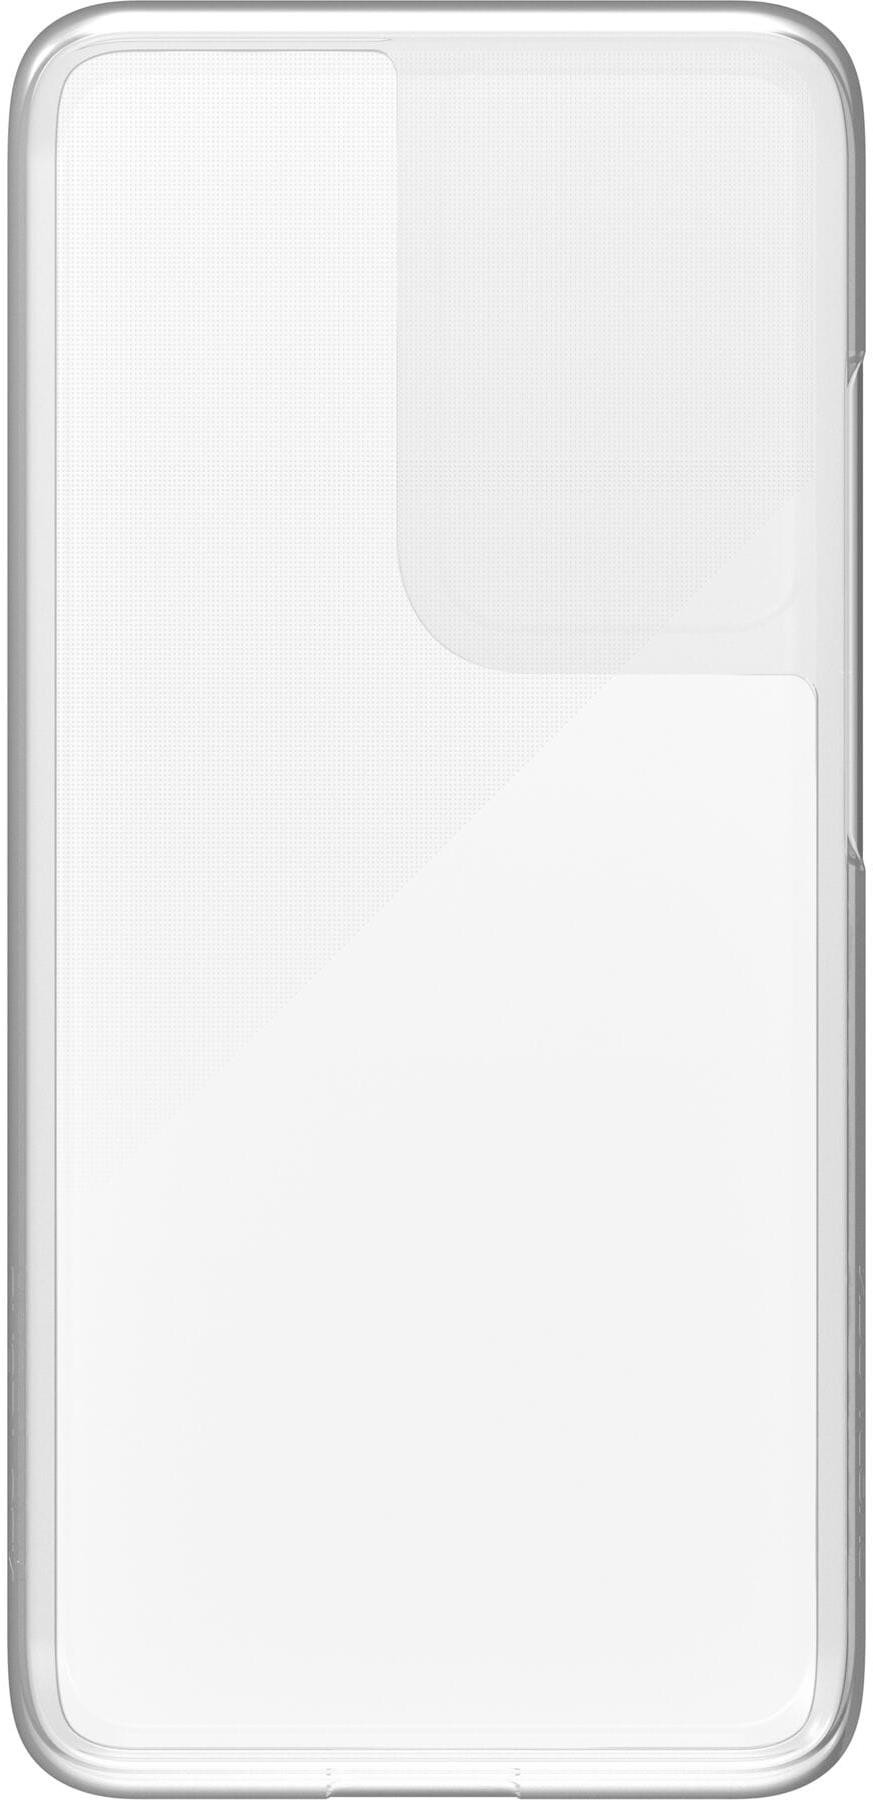 Poncho - Samsung Galaxy S21 Ultra image 0